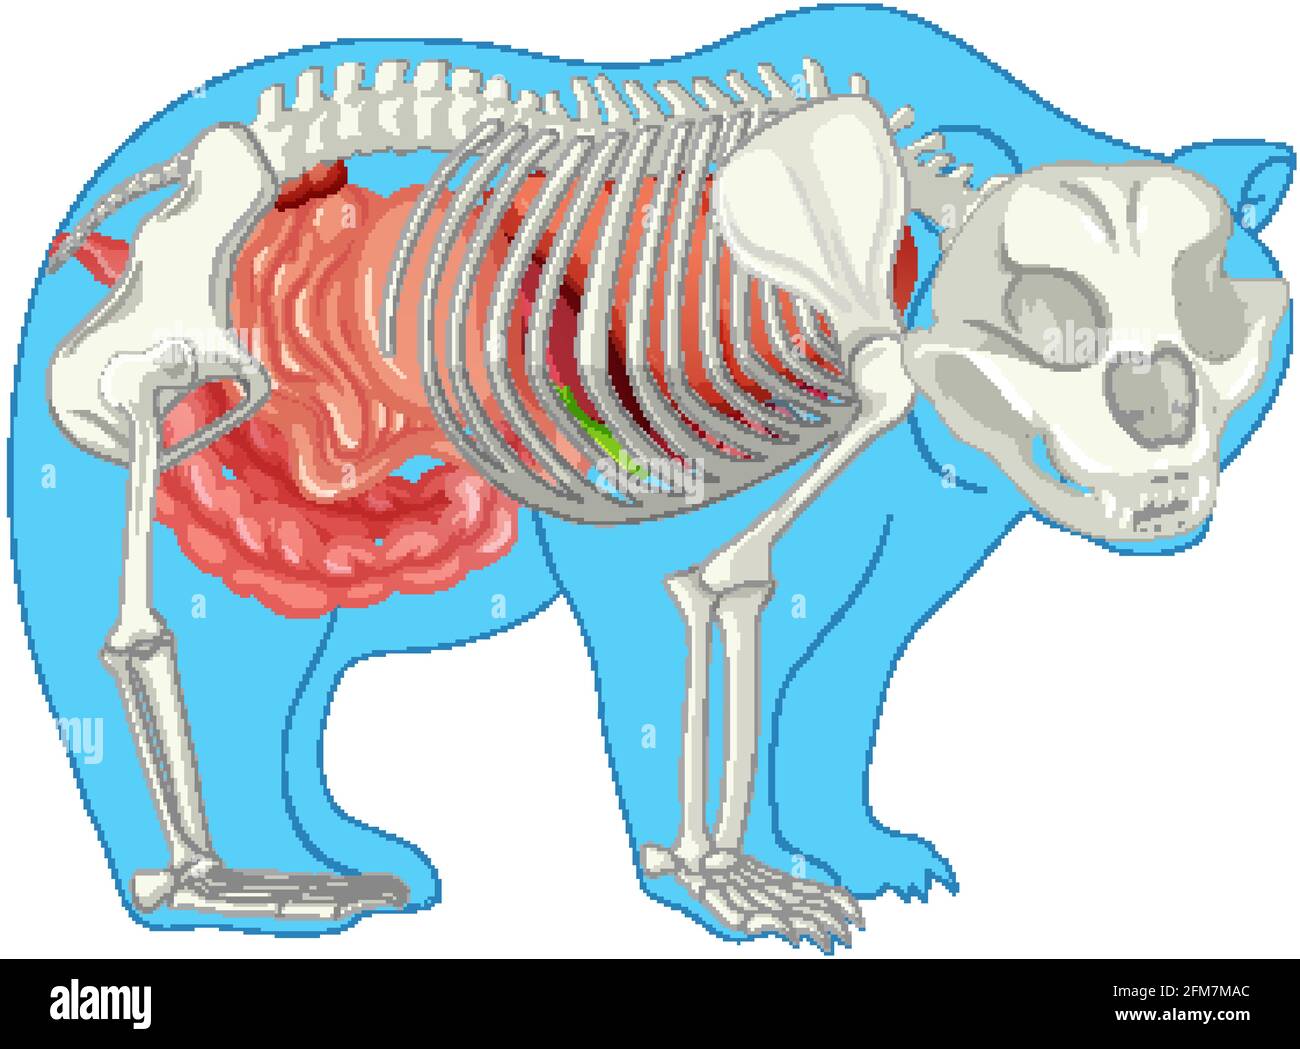 Anatomy of wild bear isolated illustration Stock Vector Image & Art - Alamy